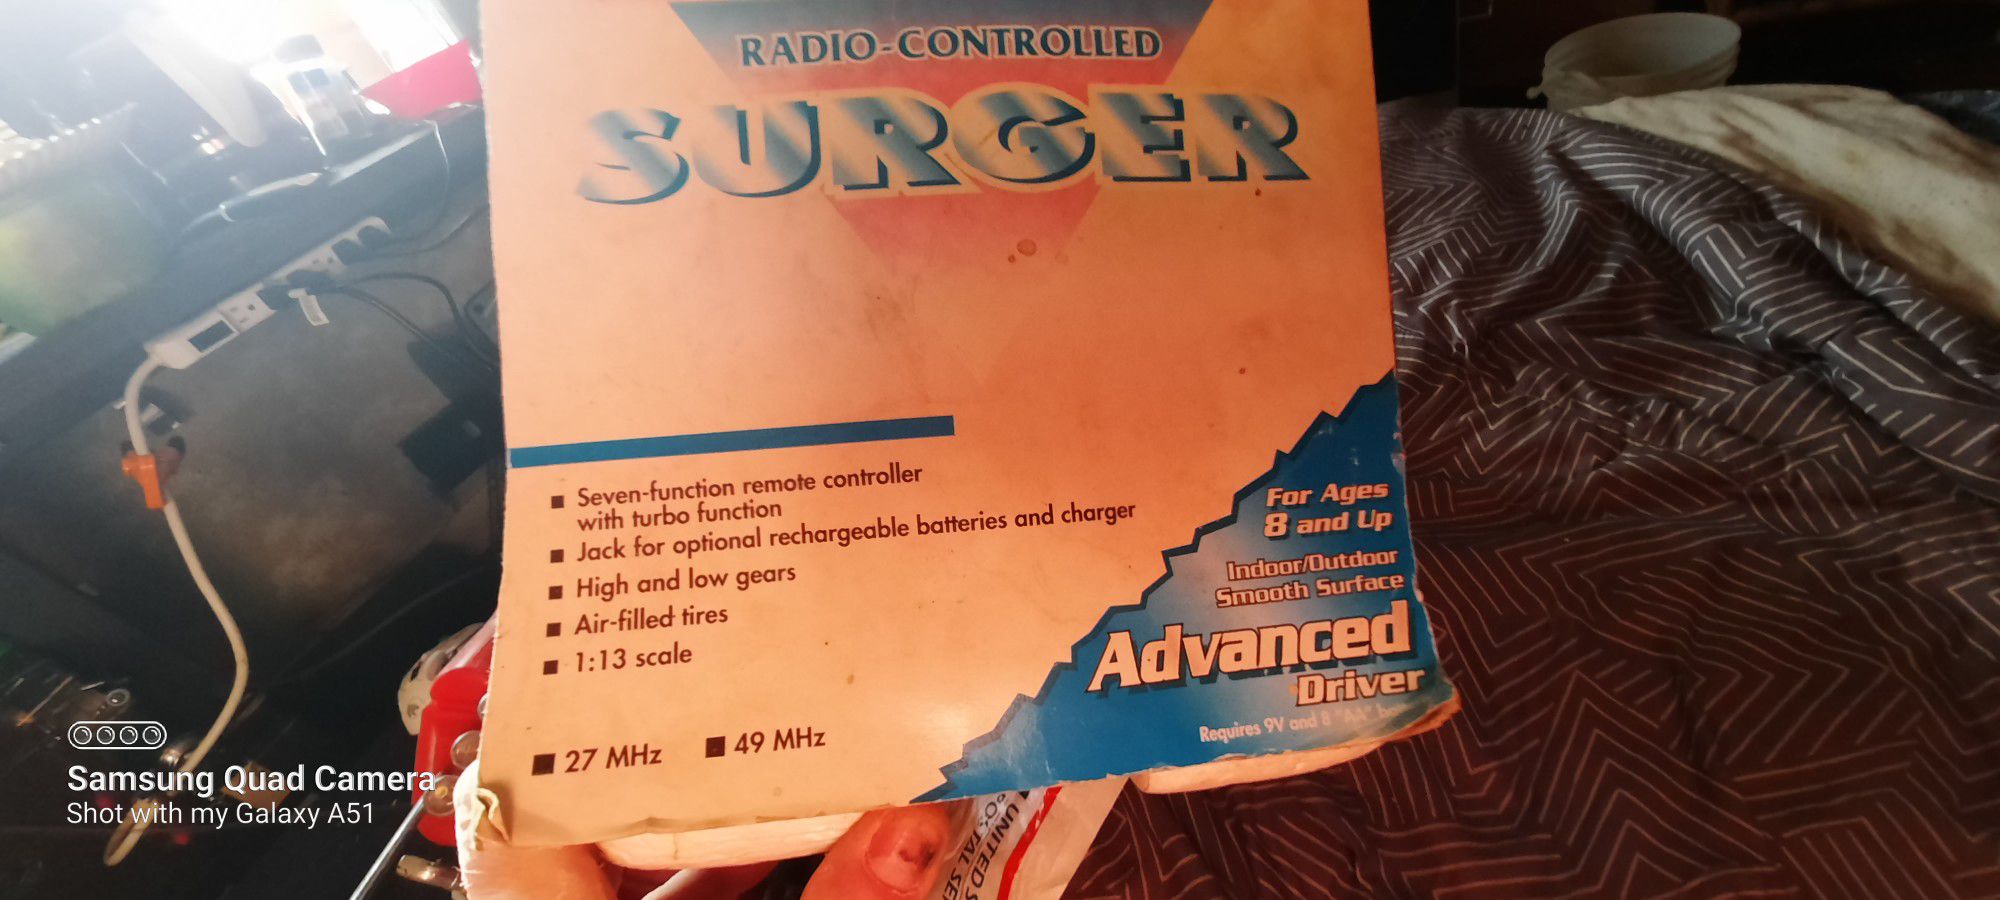 Late 90s SERGER RADIO  CONTROLLED  RADIOSHACK 